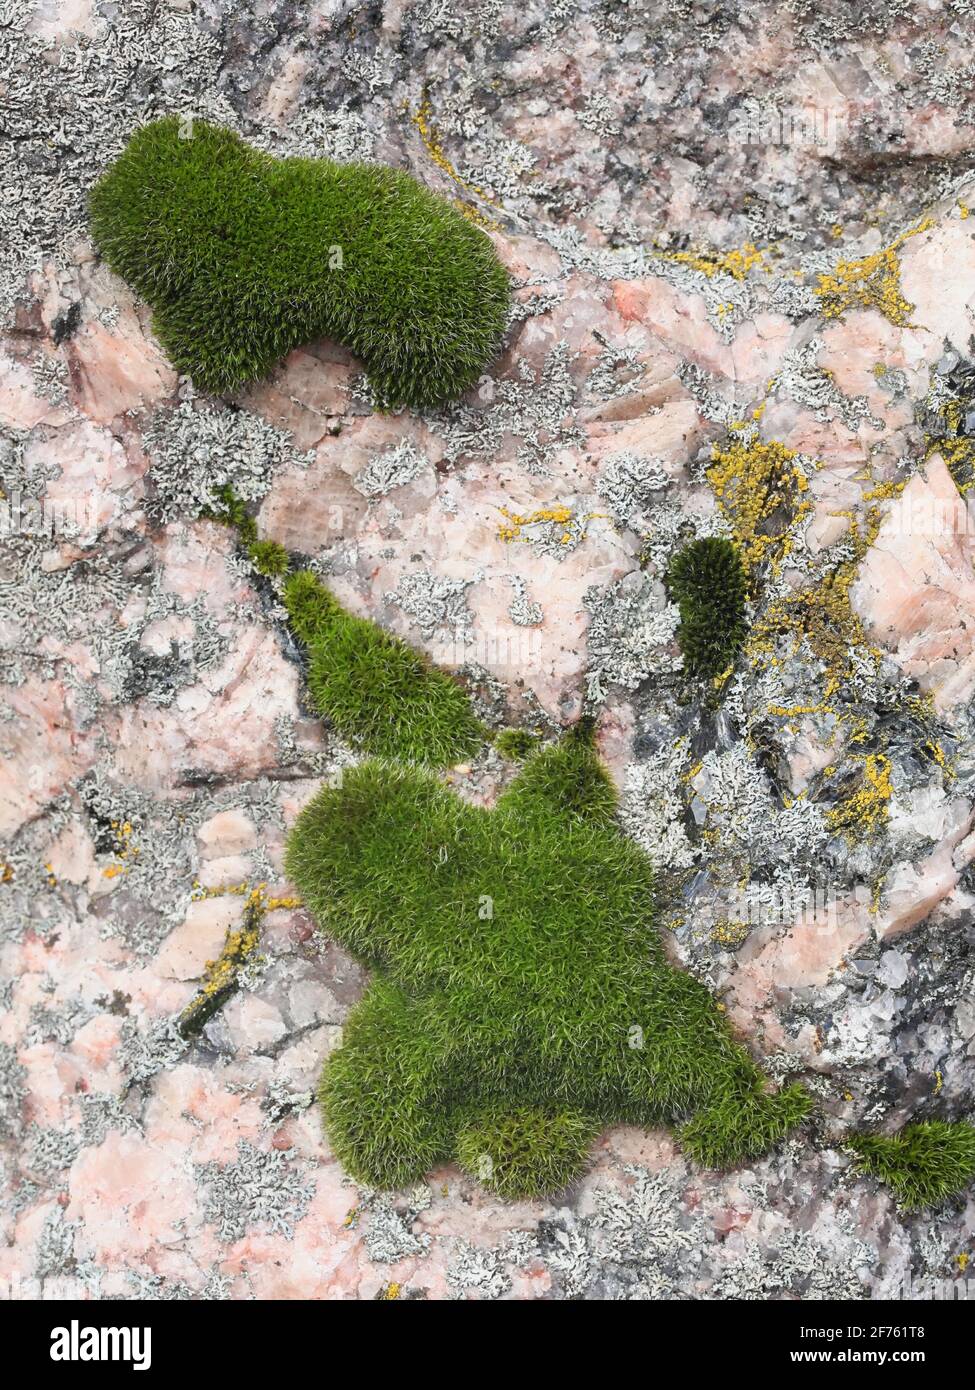 Grimmia muehlenbeckii, un musgo de roca de Finlandia sin nombre inglés común Foto de stock